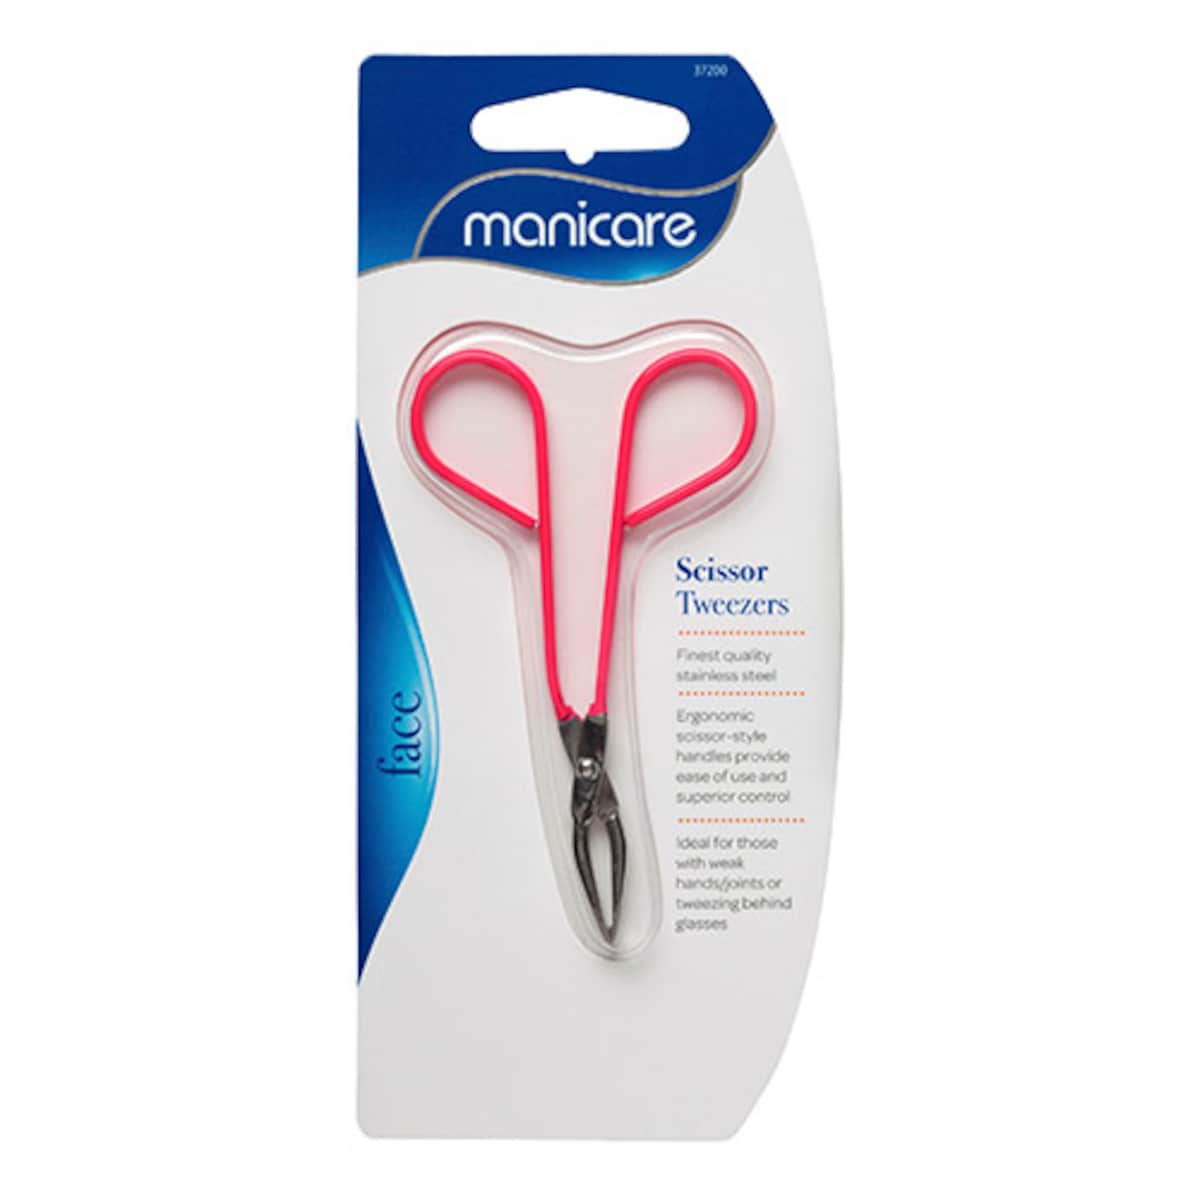 Manicare Eyebrow Tweezer Scissor Style 1 Pack